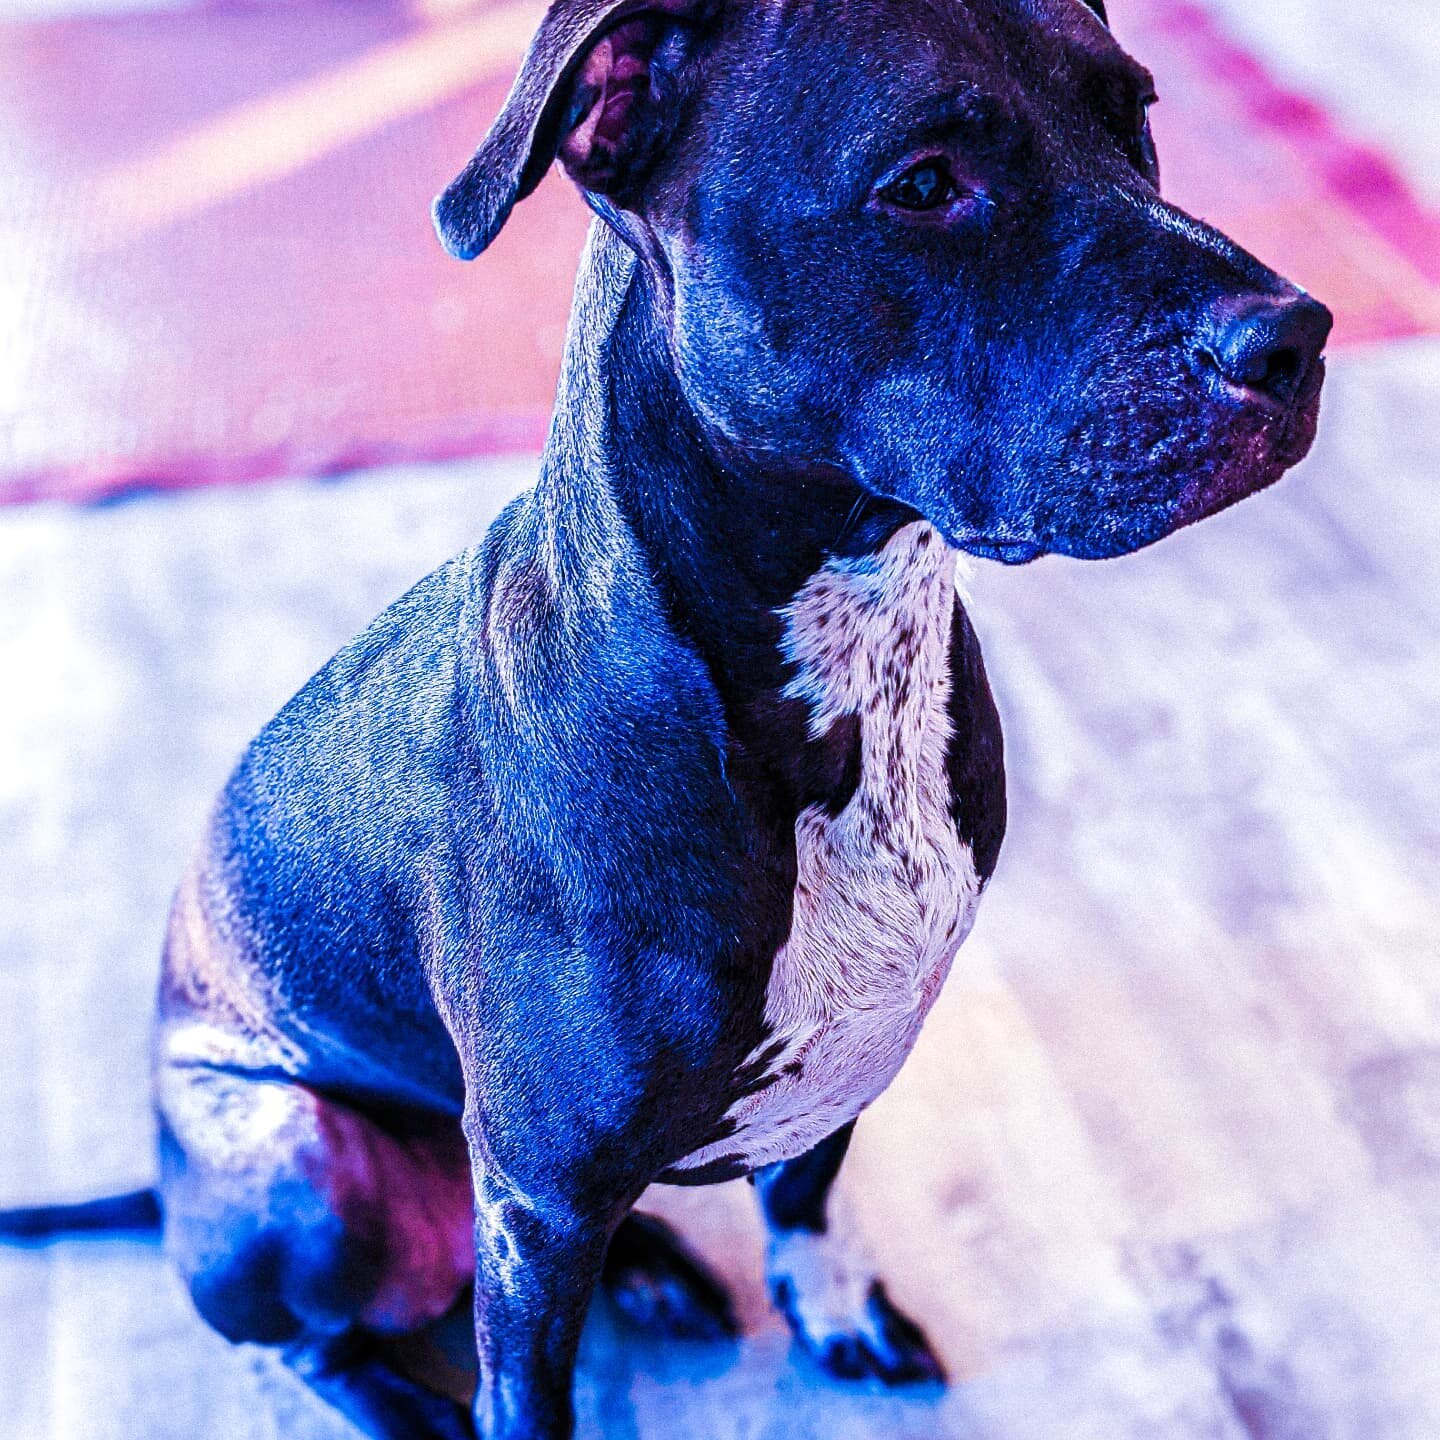 Future dog wishes you a happy 2022.

#pupsofinstagram #shotonpixel #doggosbeingdoggos